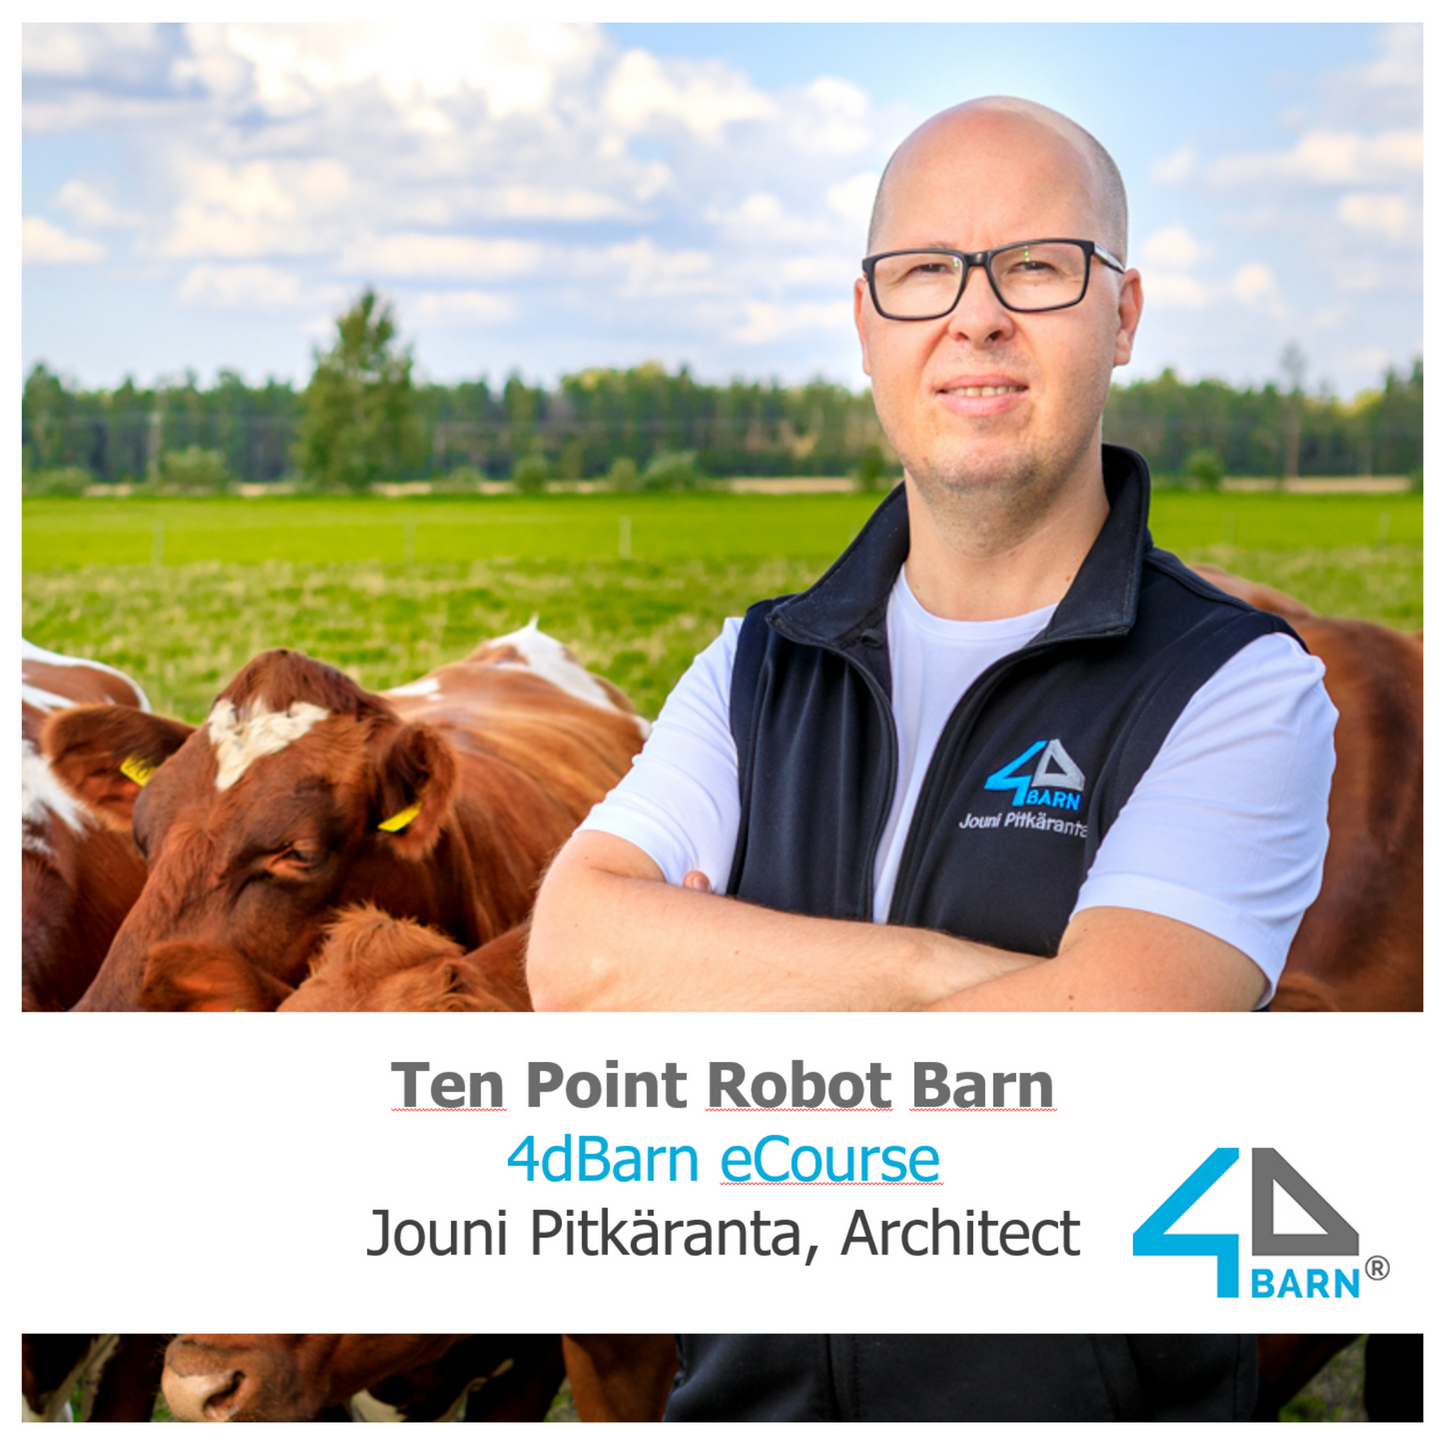 Ten Point Robot Barn